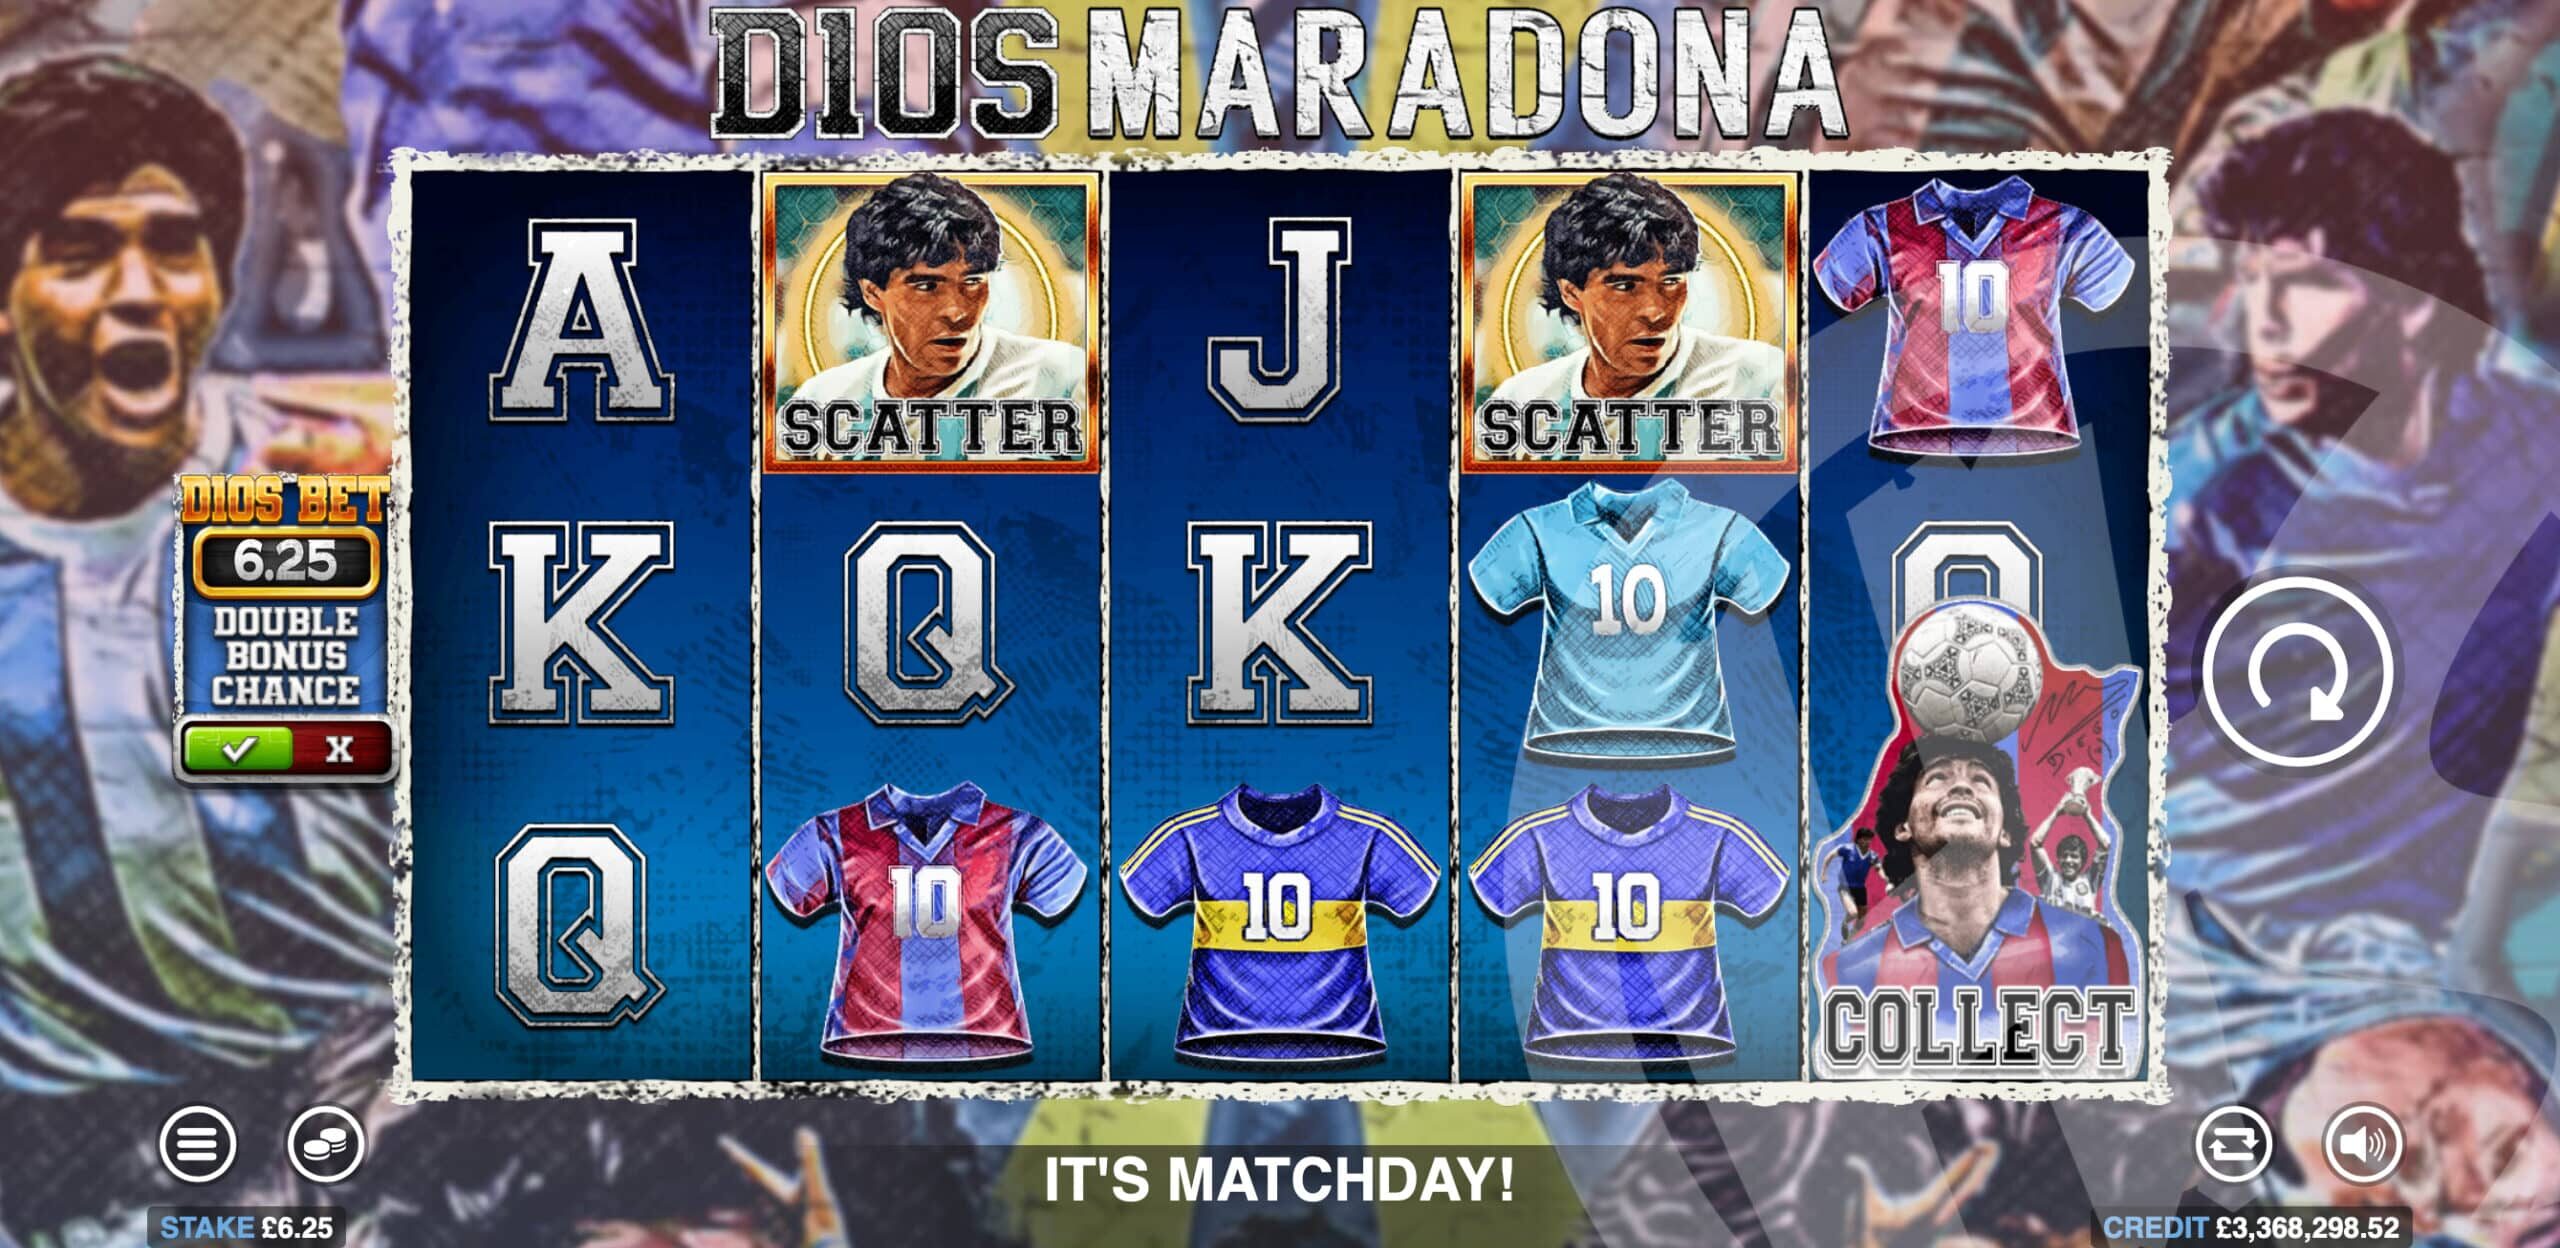 D10S Maradona Base Game